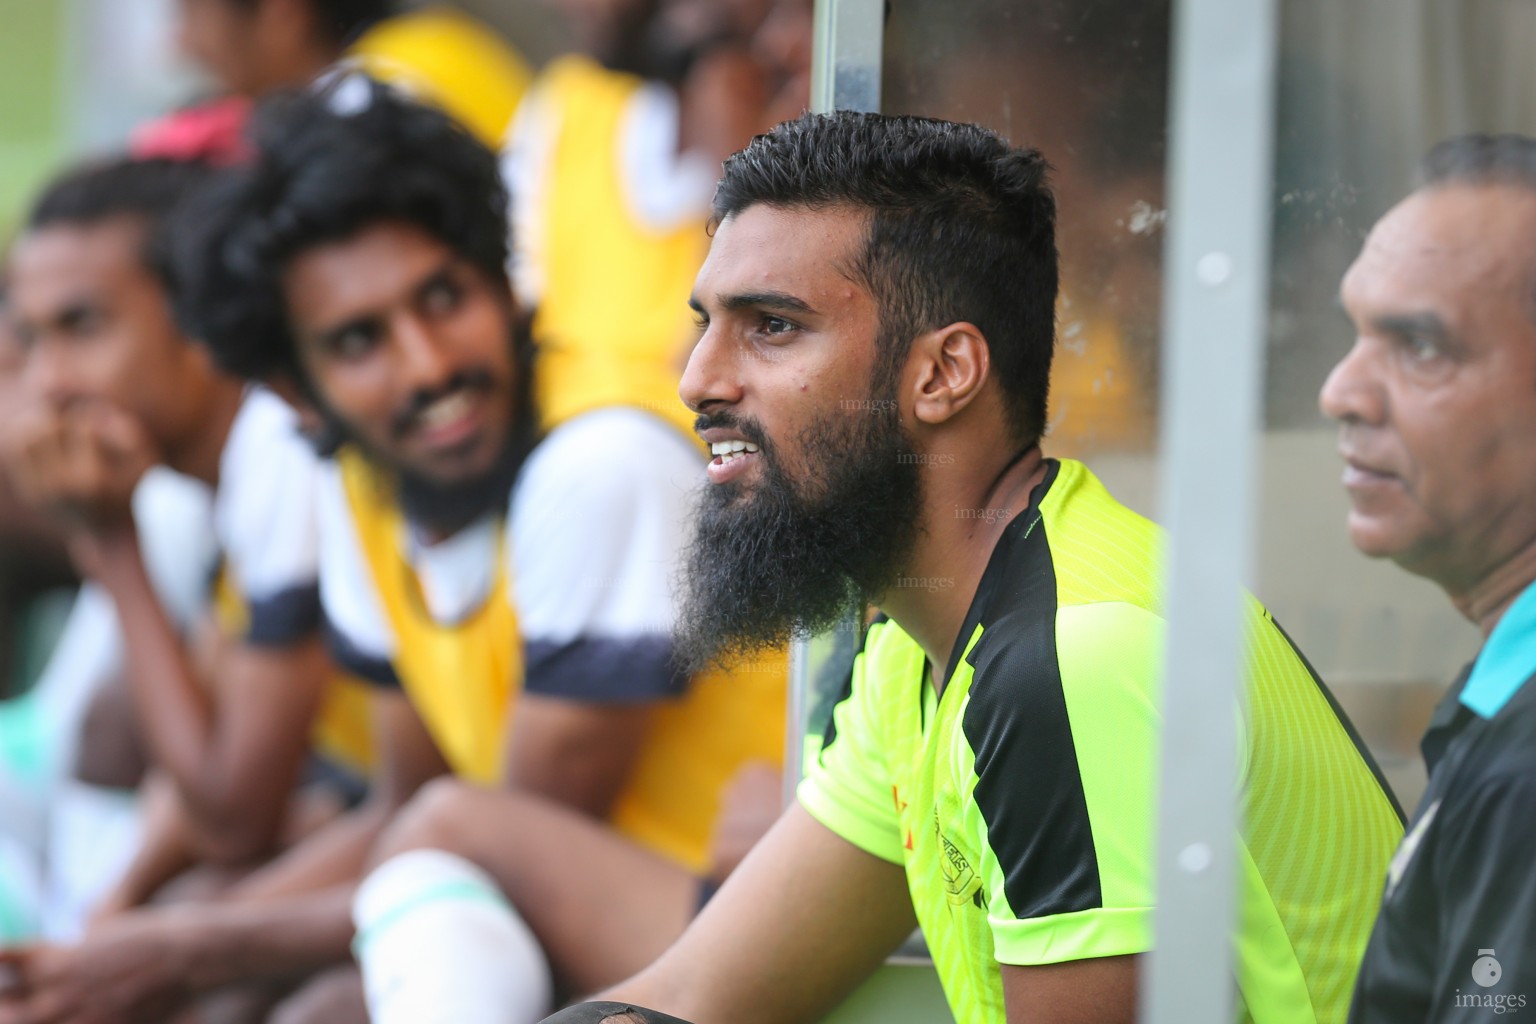 Dhiraagu Dhivehi Premier League 2018 (Club Green Streets vs Fehendhoo)